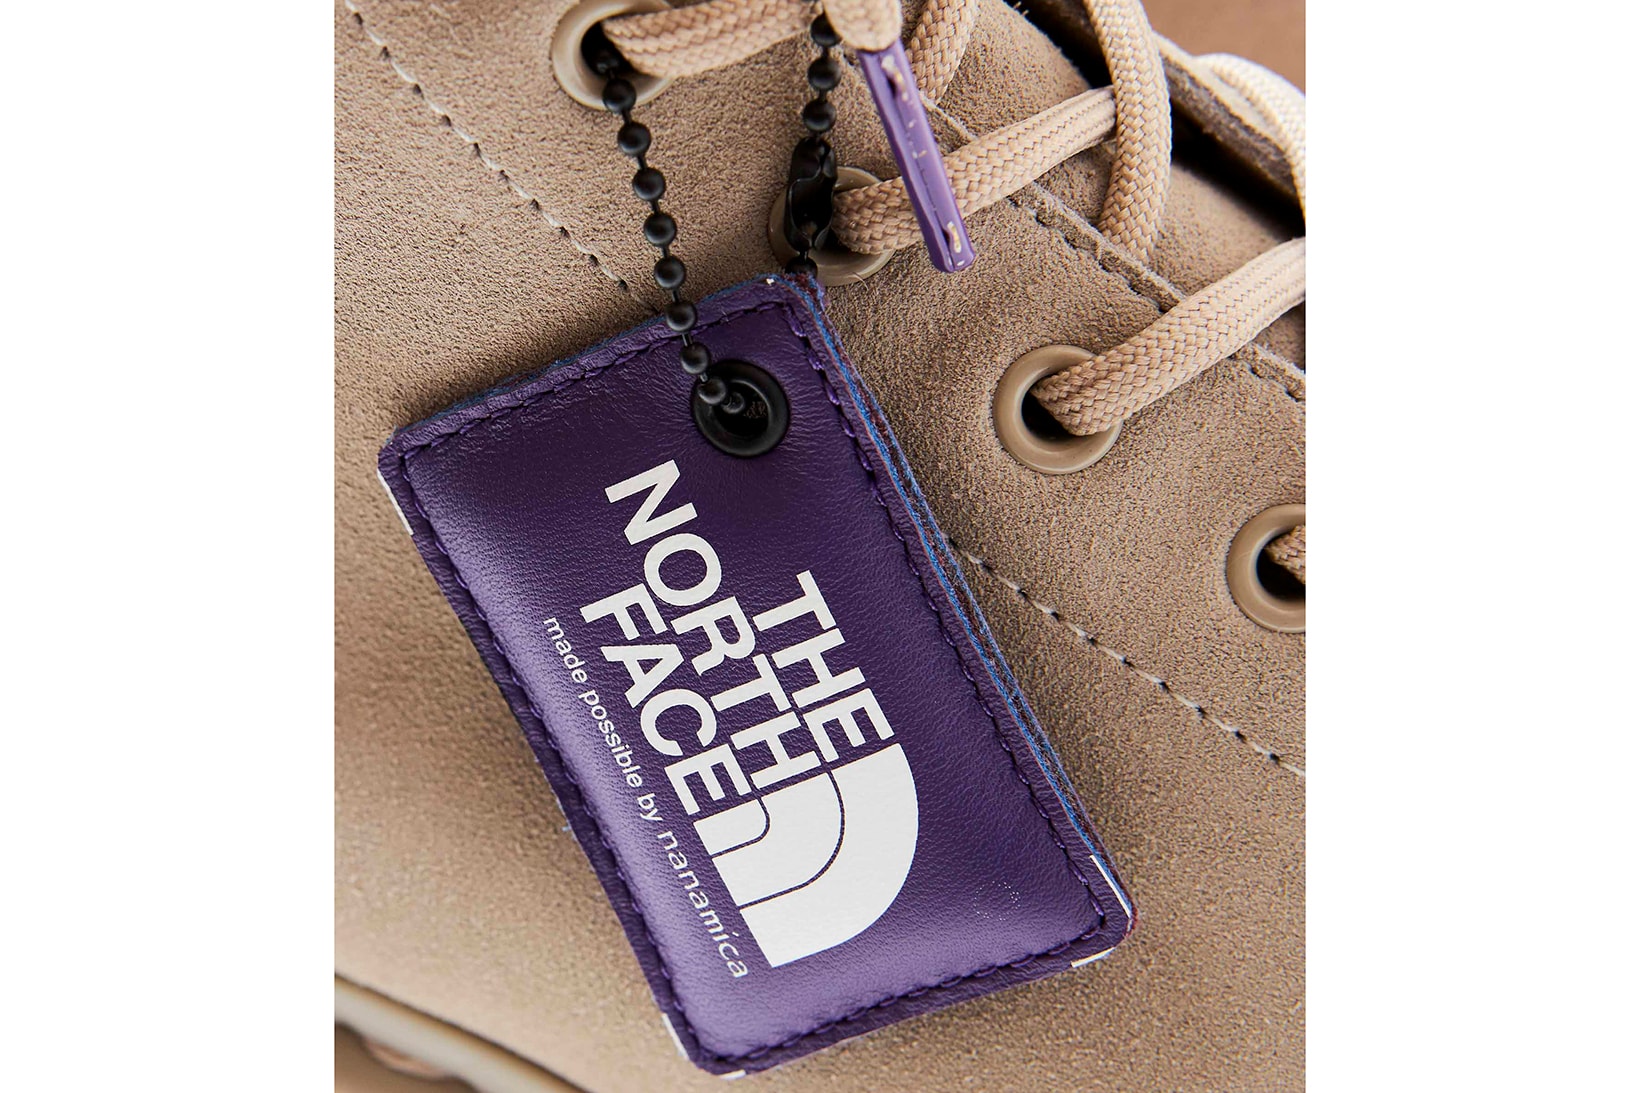 dr martens nanamica the north face 9 tie boot black beige purple shoes footwear